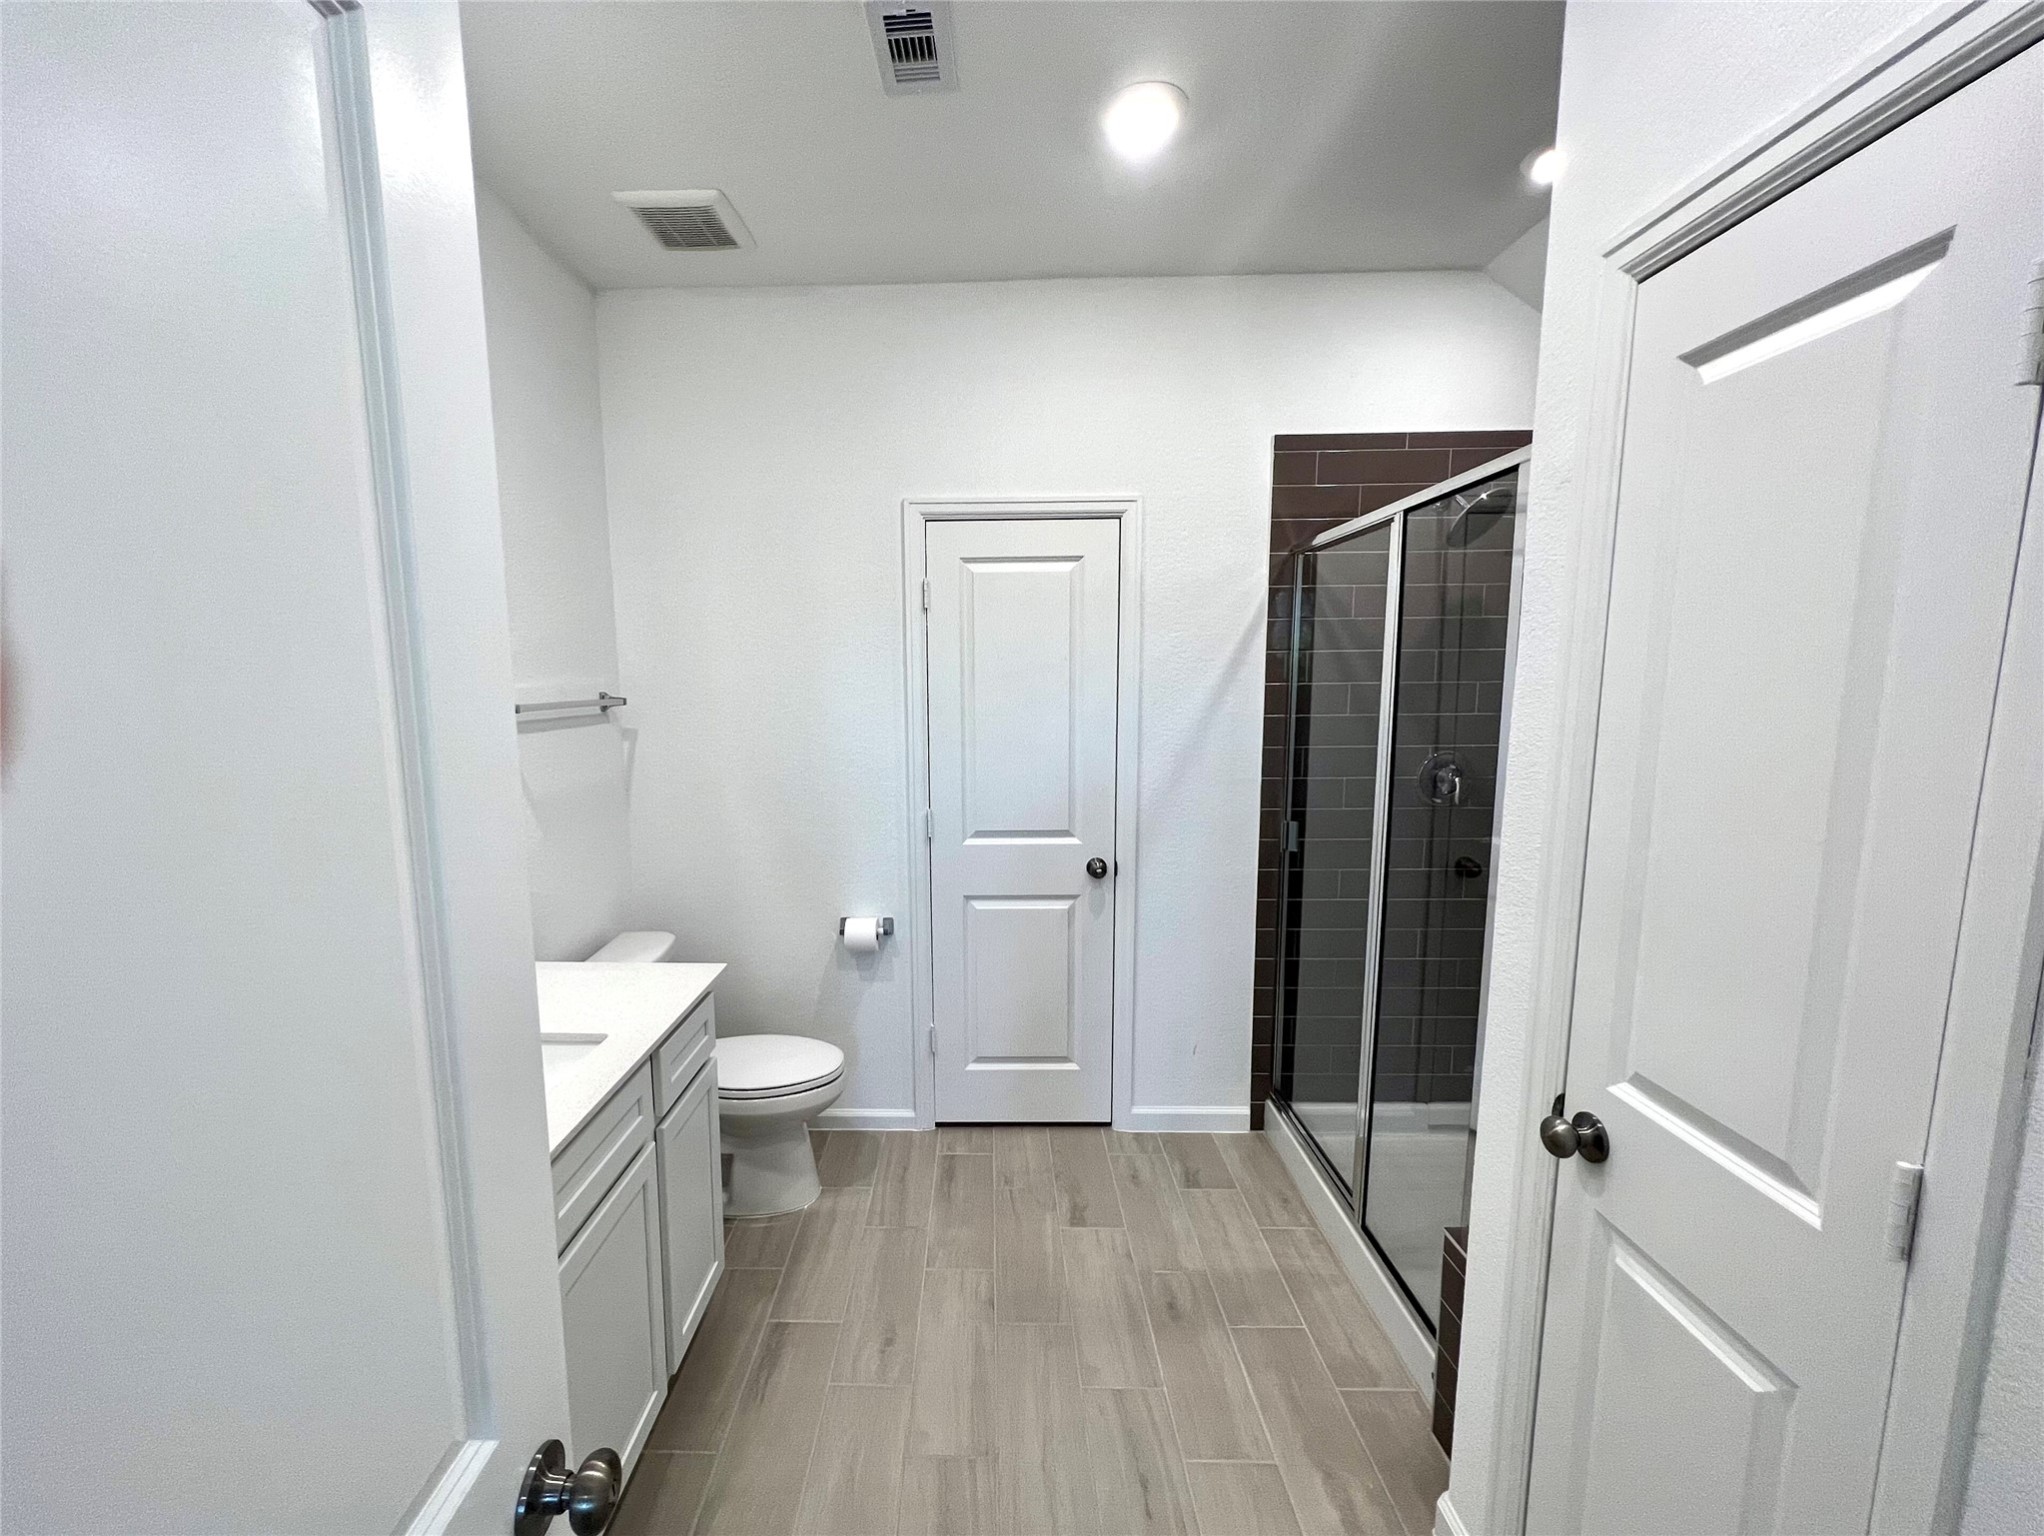 Secondary bathroom with huge walk-in shower & sleek modern finishes.